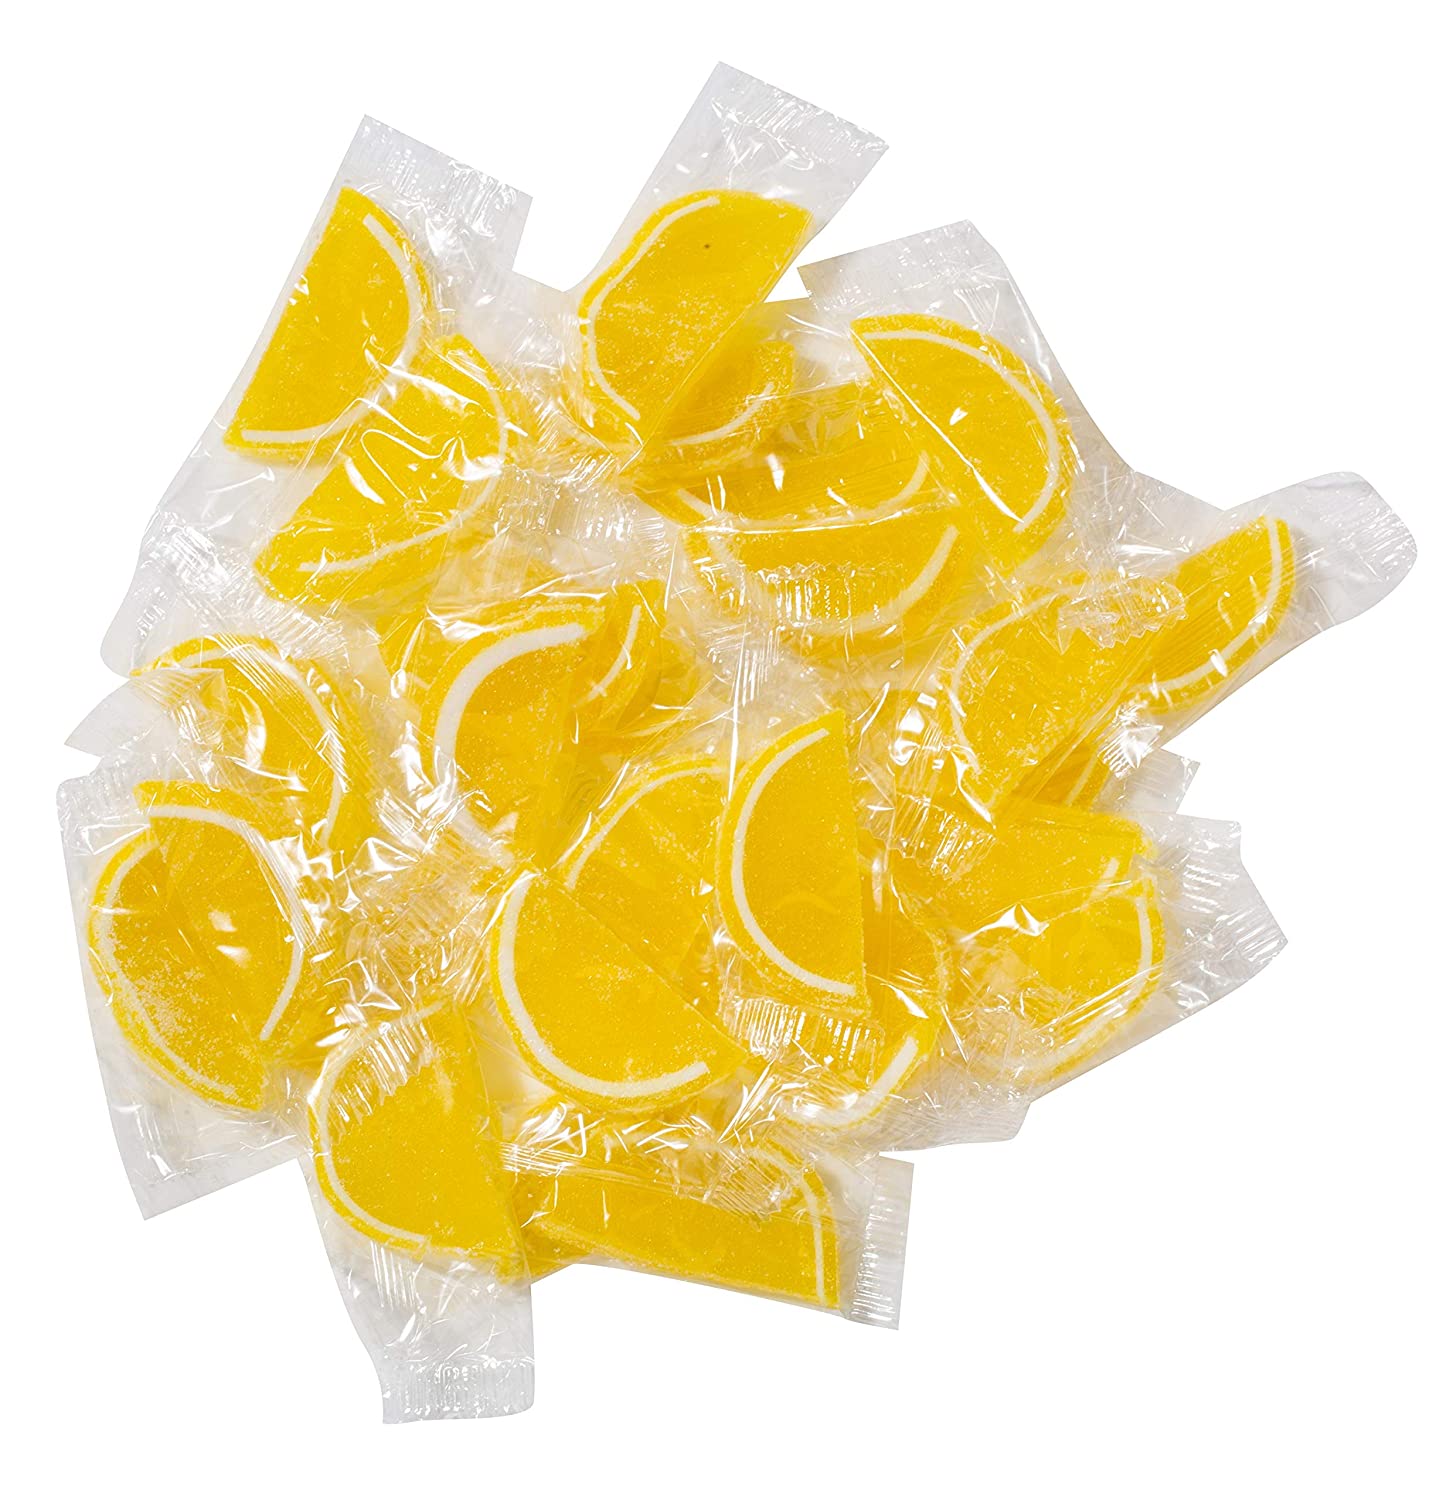 1lb Boston Fruit Slices – Sugar Free – Lemon Only